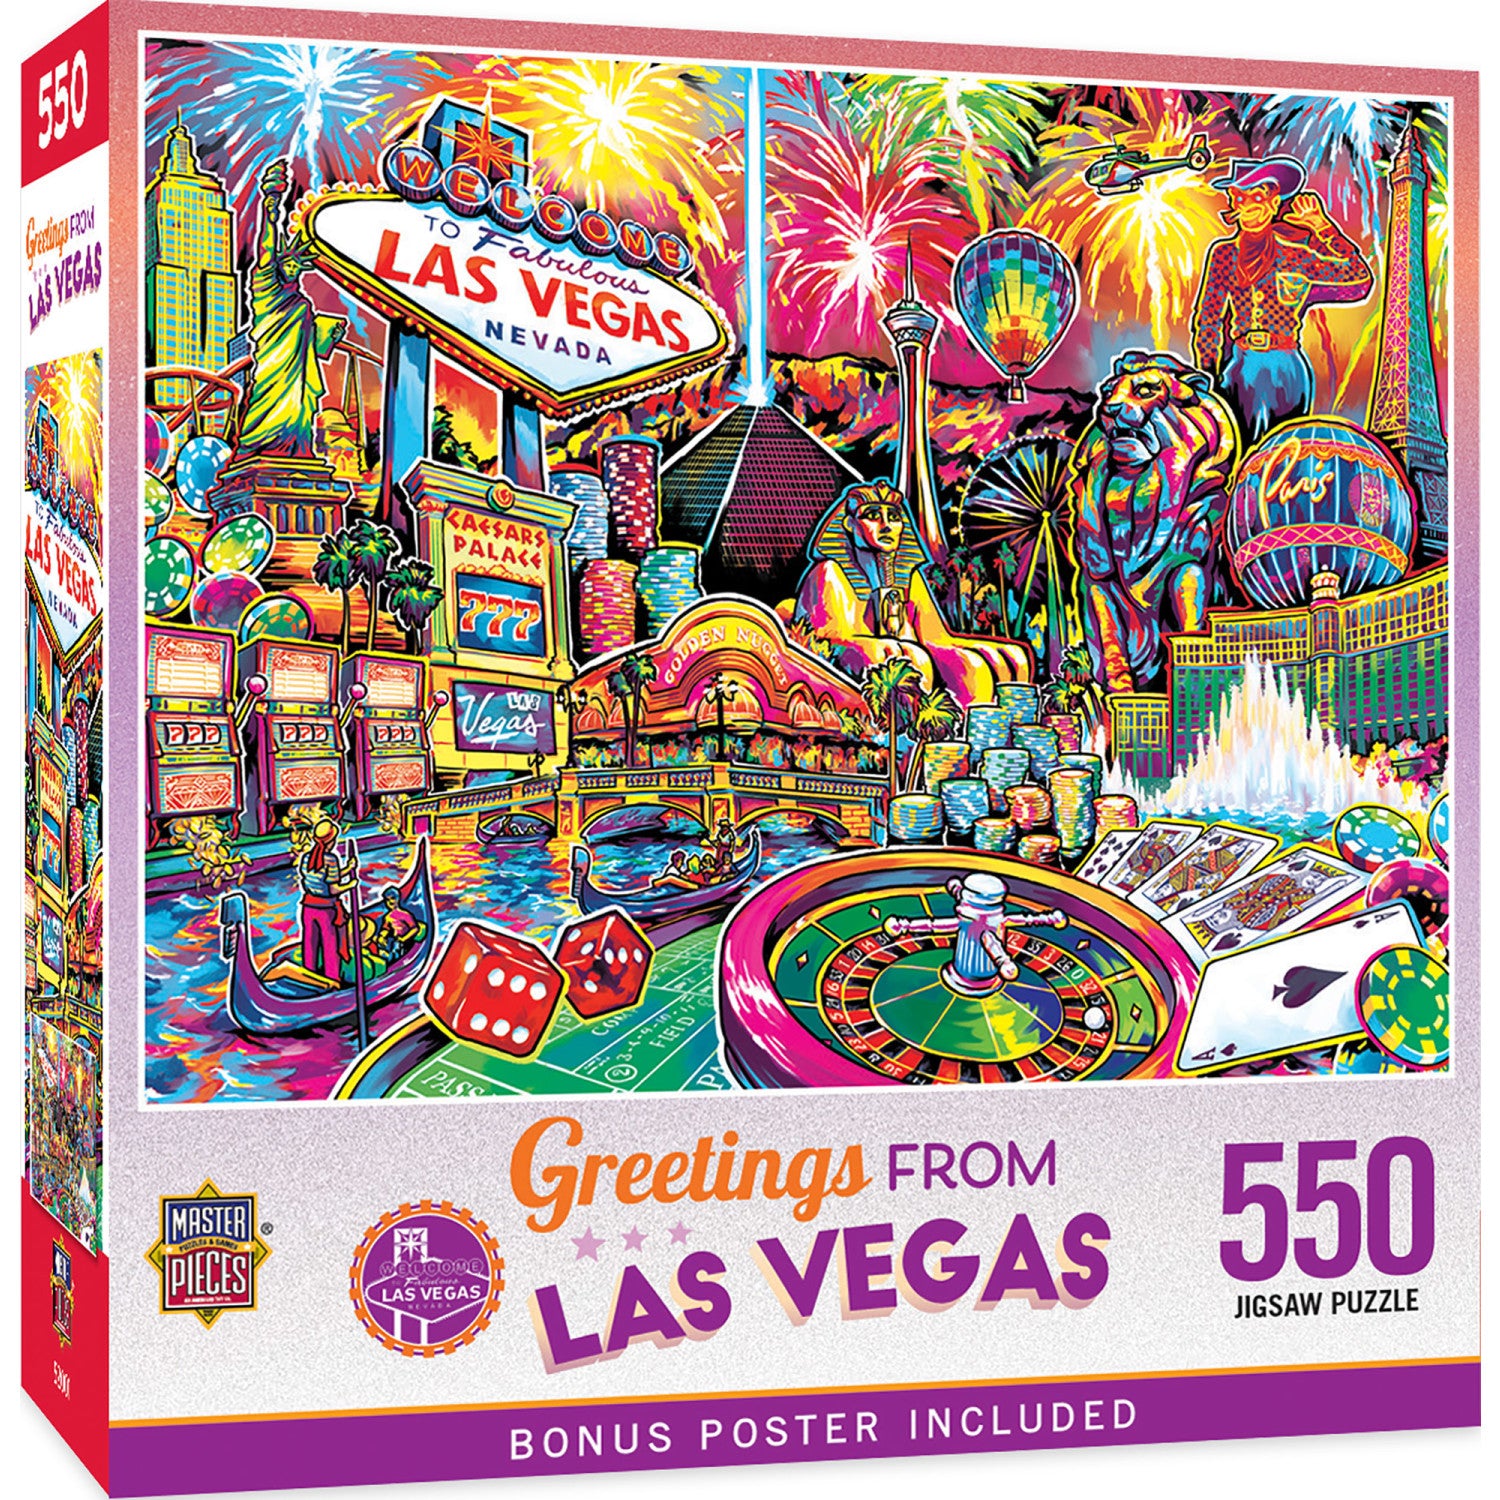 Greetings From Las Vegas - 550 Piece Puzzle